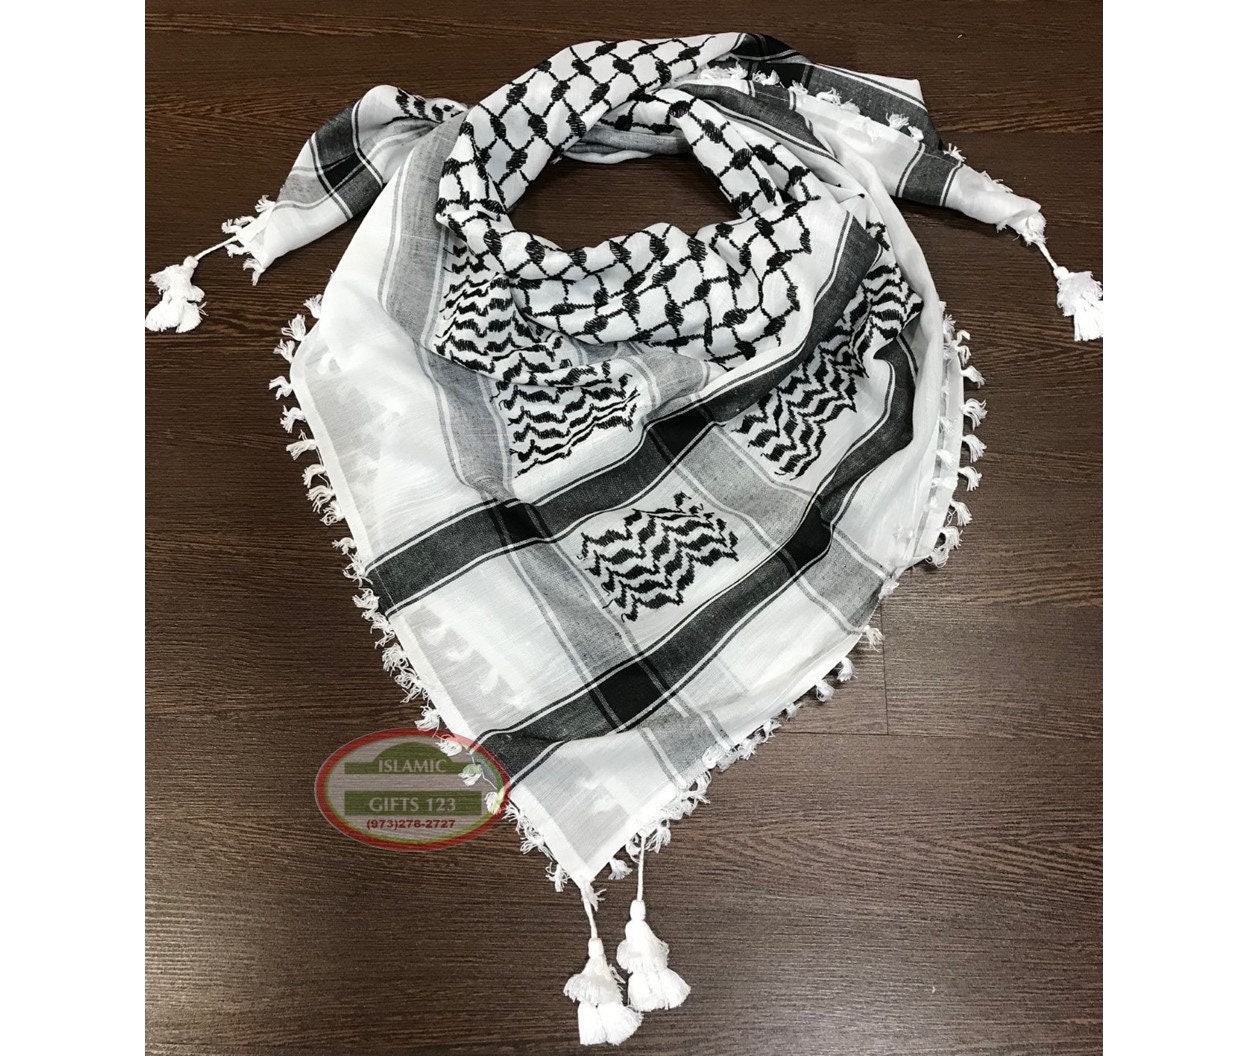 Cotton Palestinian Shemagh Freedom Scarf Keffiyeh Head Wrap Black